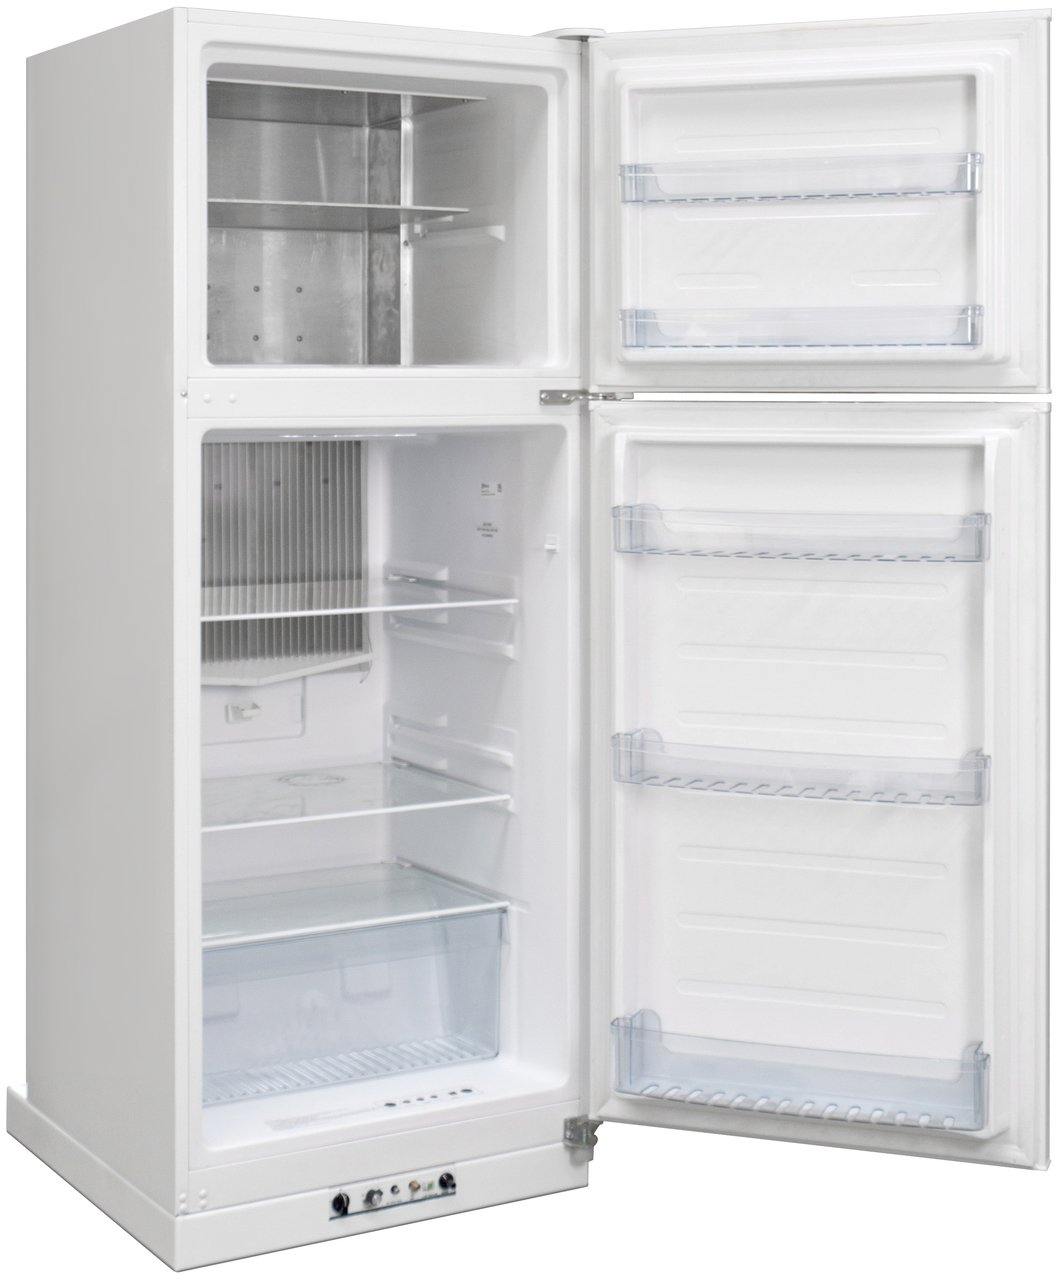 Diamond Propane Refrigerator Diamond Quest 14 Propane Refrigerator-Freezer in White 14 cu.ft.